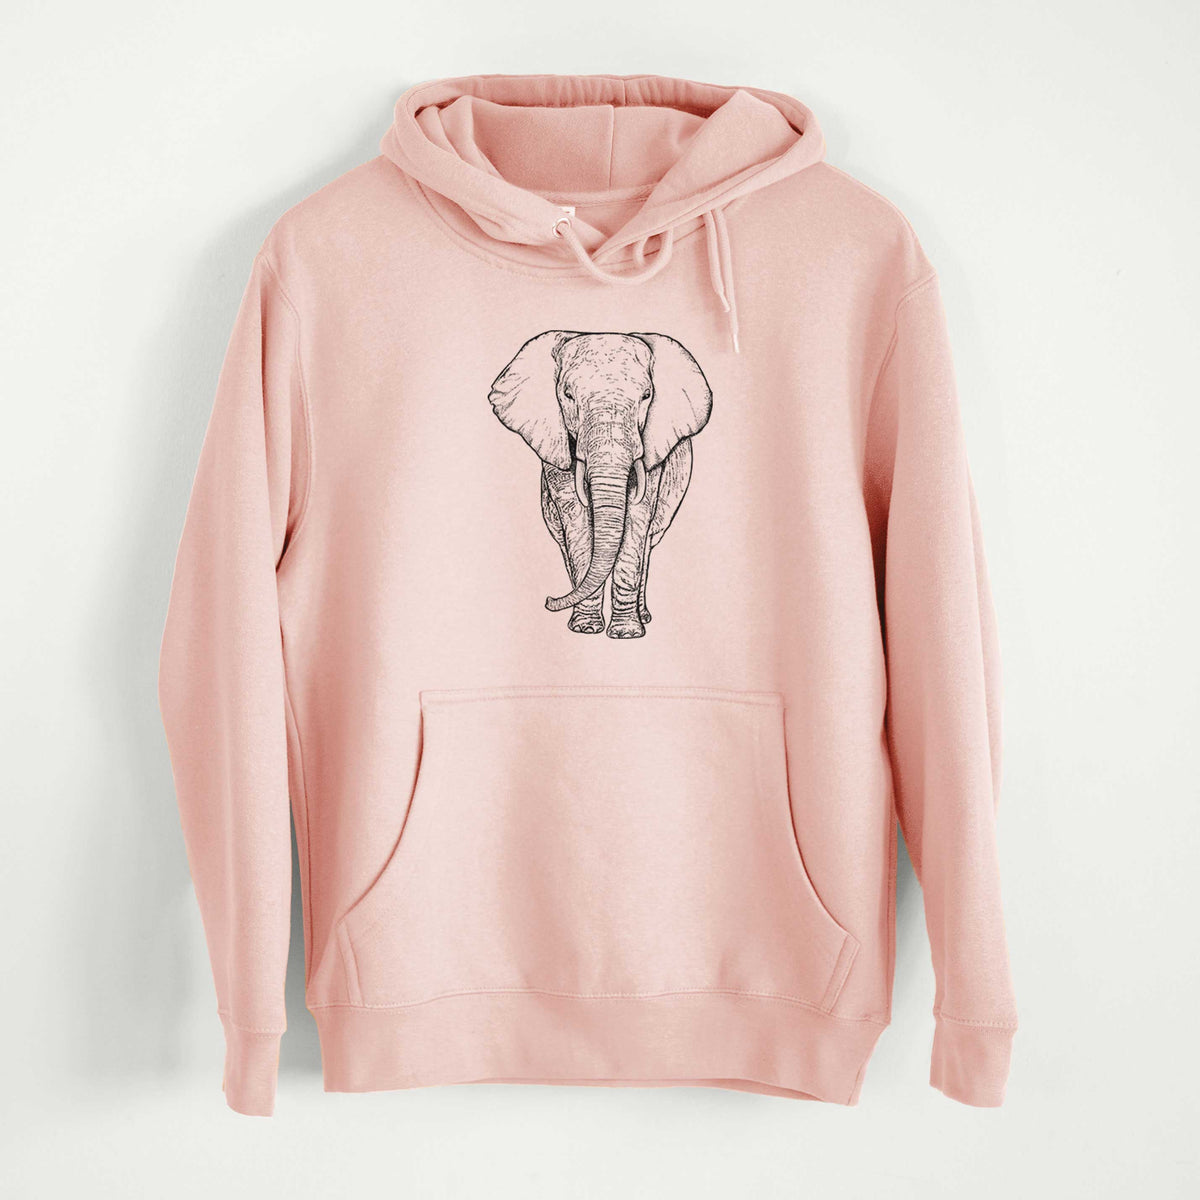 Loxodonta africana - African Elephant  - Mid-Weight Unisex Premium Blend Hoodie